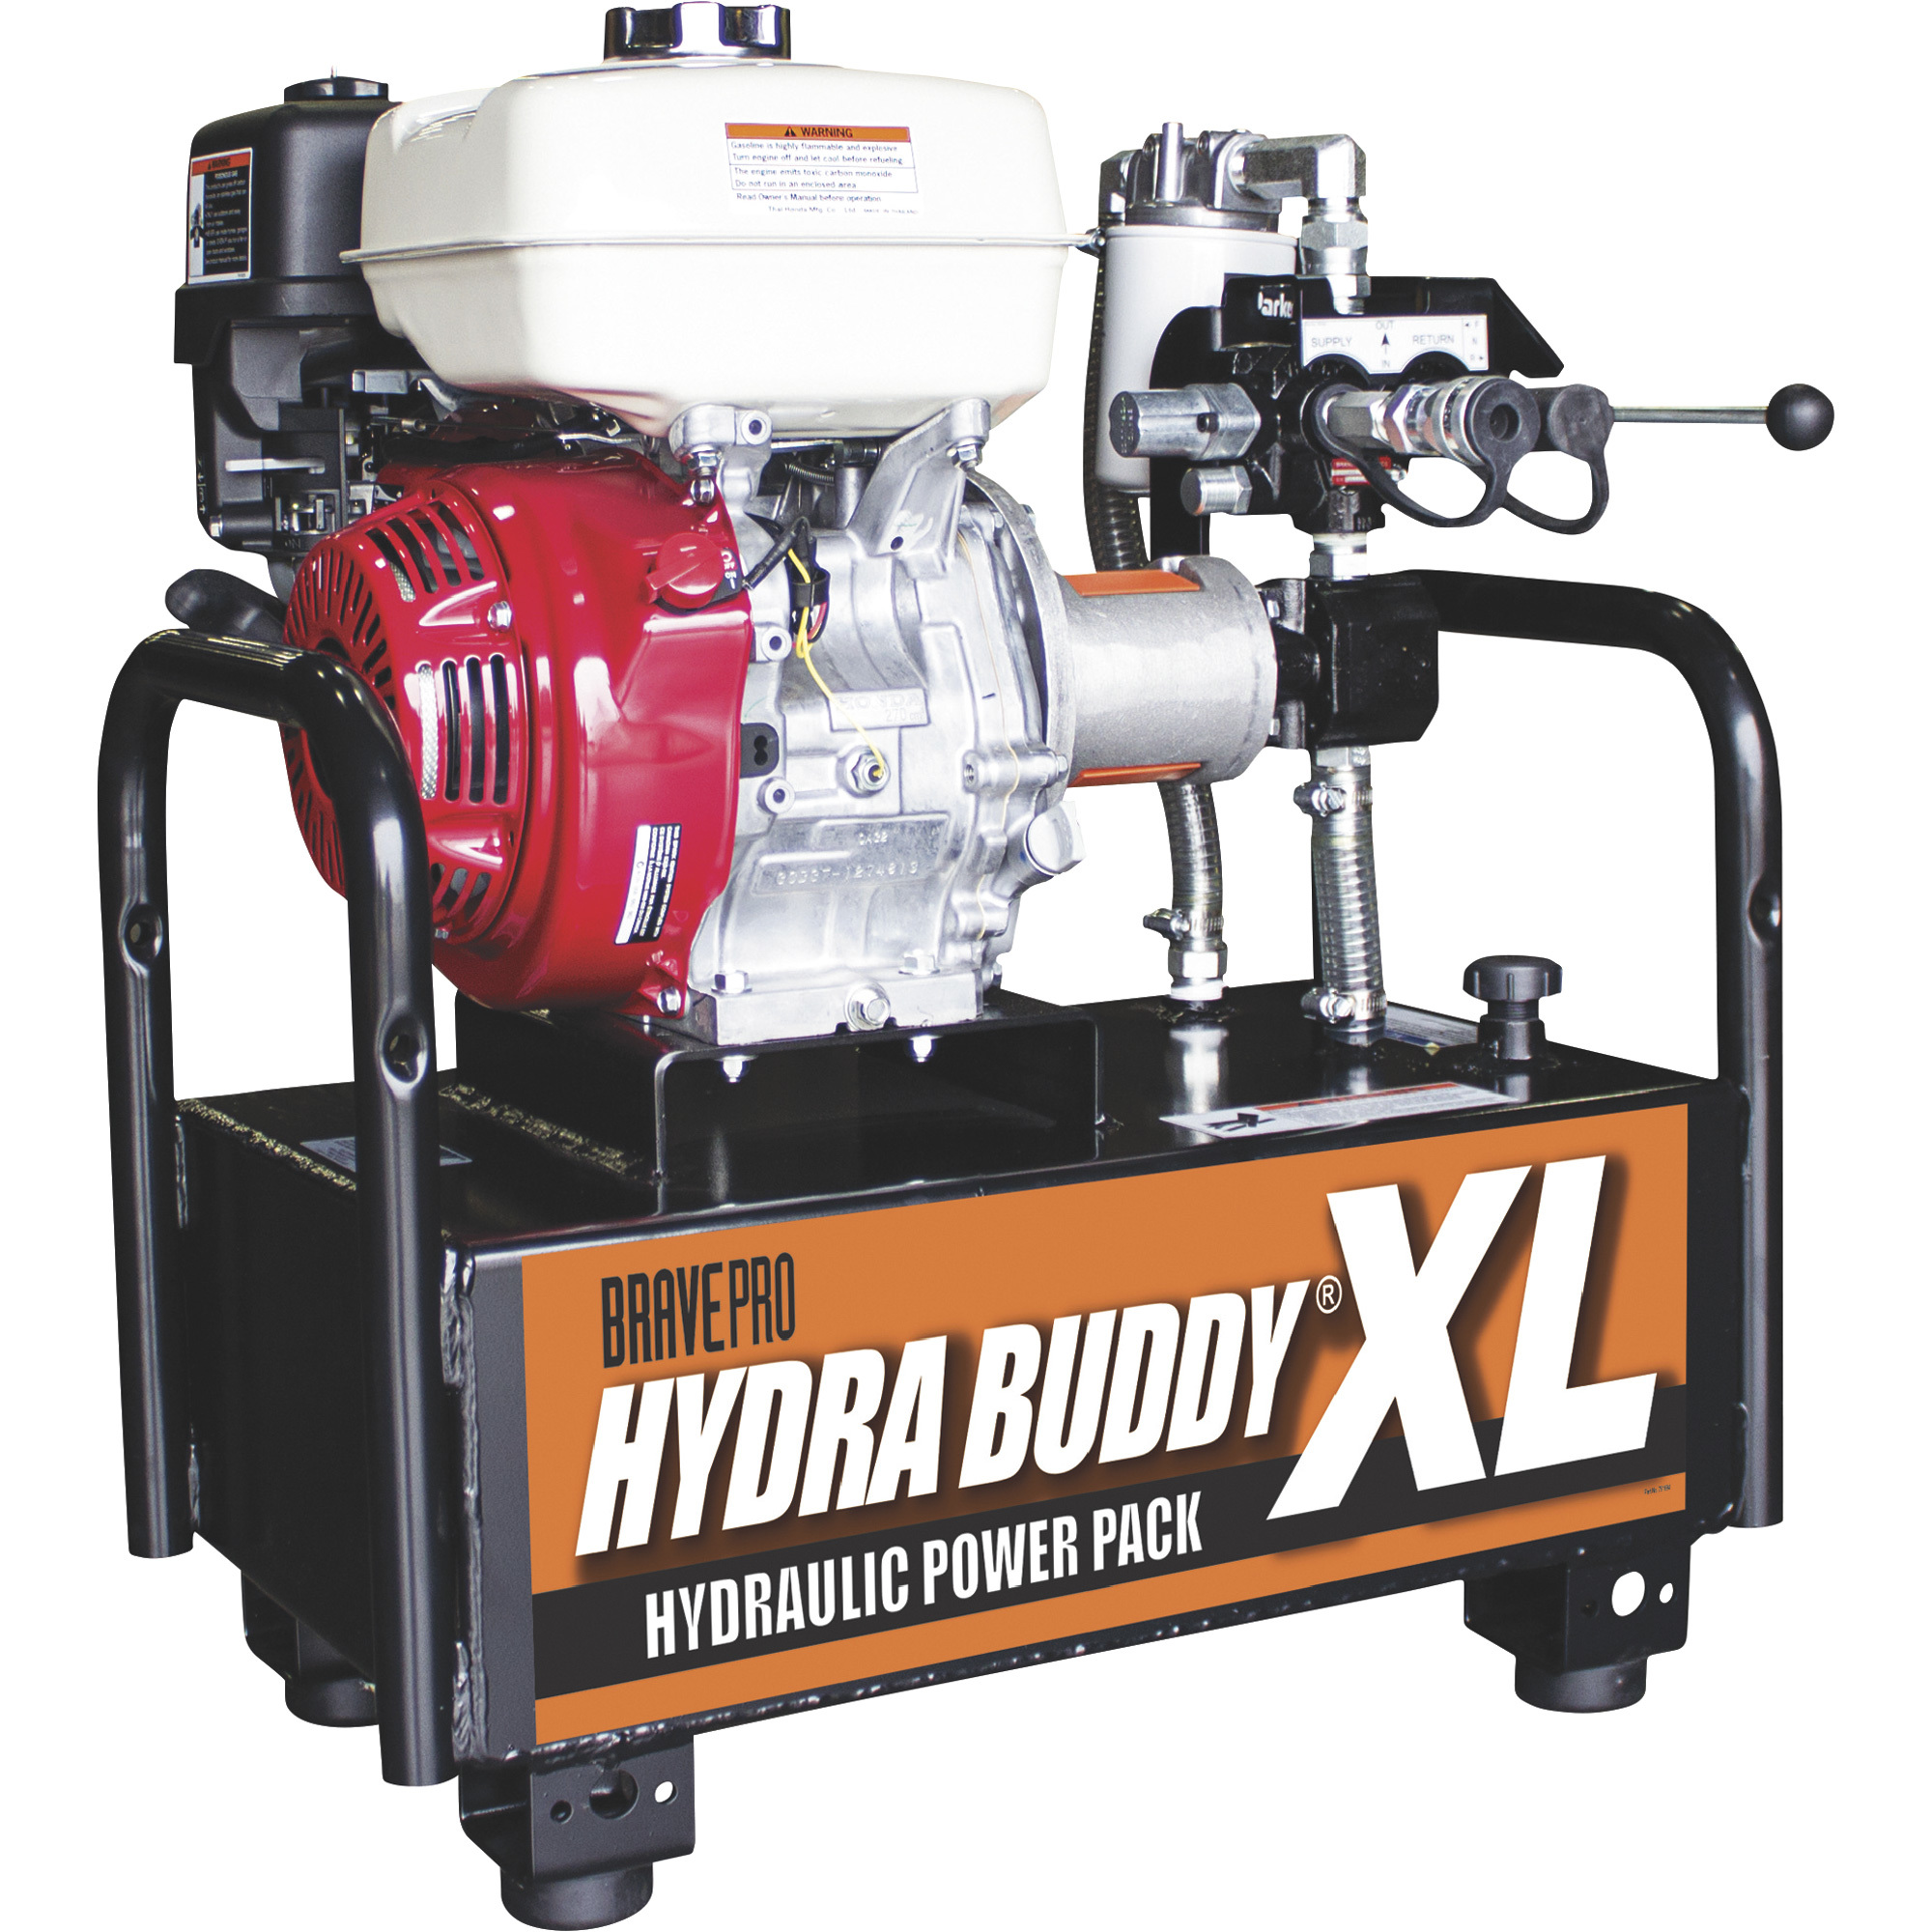 BravePro Portable Hydraulic Power Pack â 270cc Honda GX270 Engine, 10.3 Gal. Capacity, Model HBHXL16GX